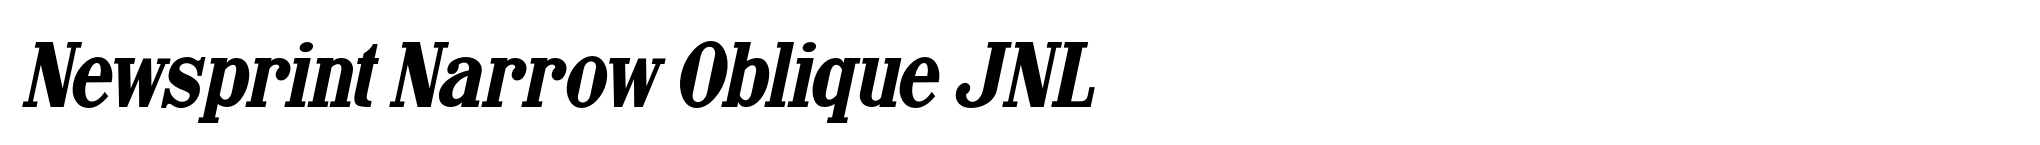 Newsprint Narrow Oblique JNL image